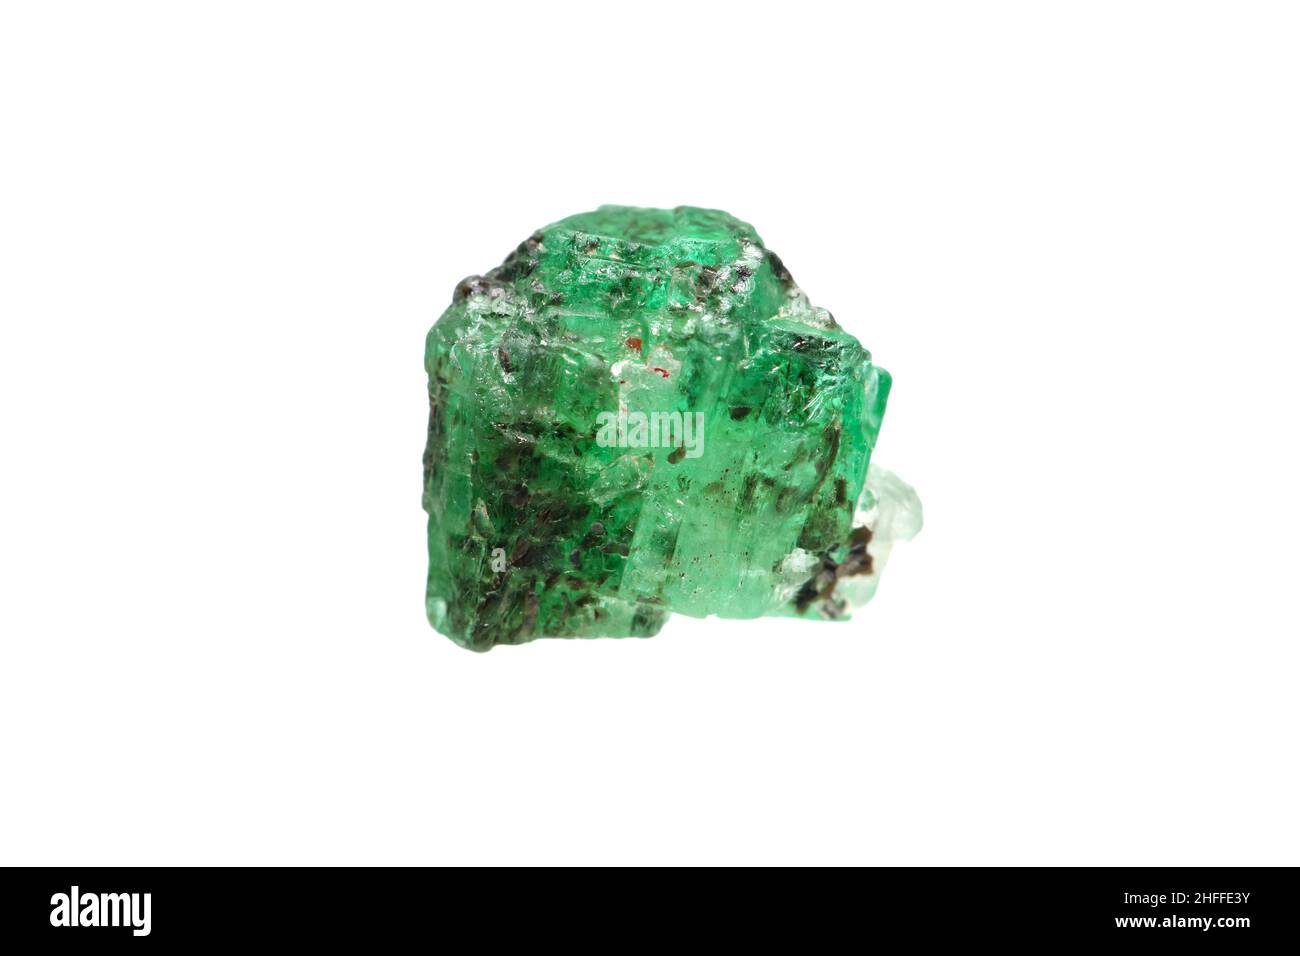 Closeup natural rough emerald (green beryl) crystal with mica inclusion Stock Photo